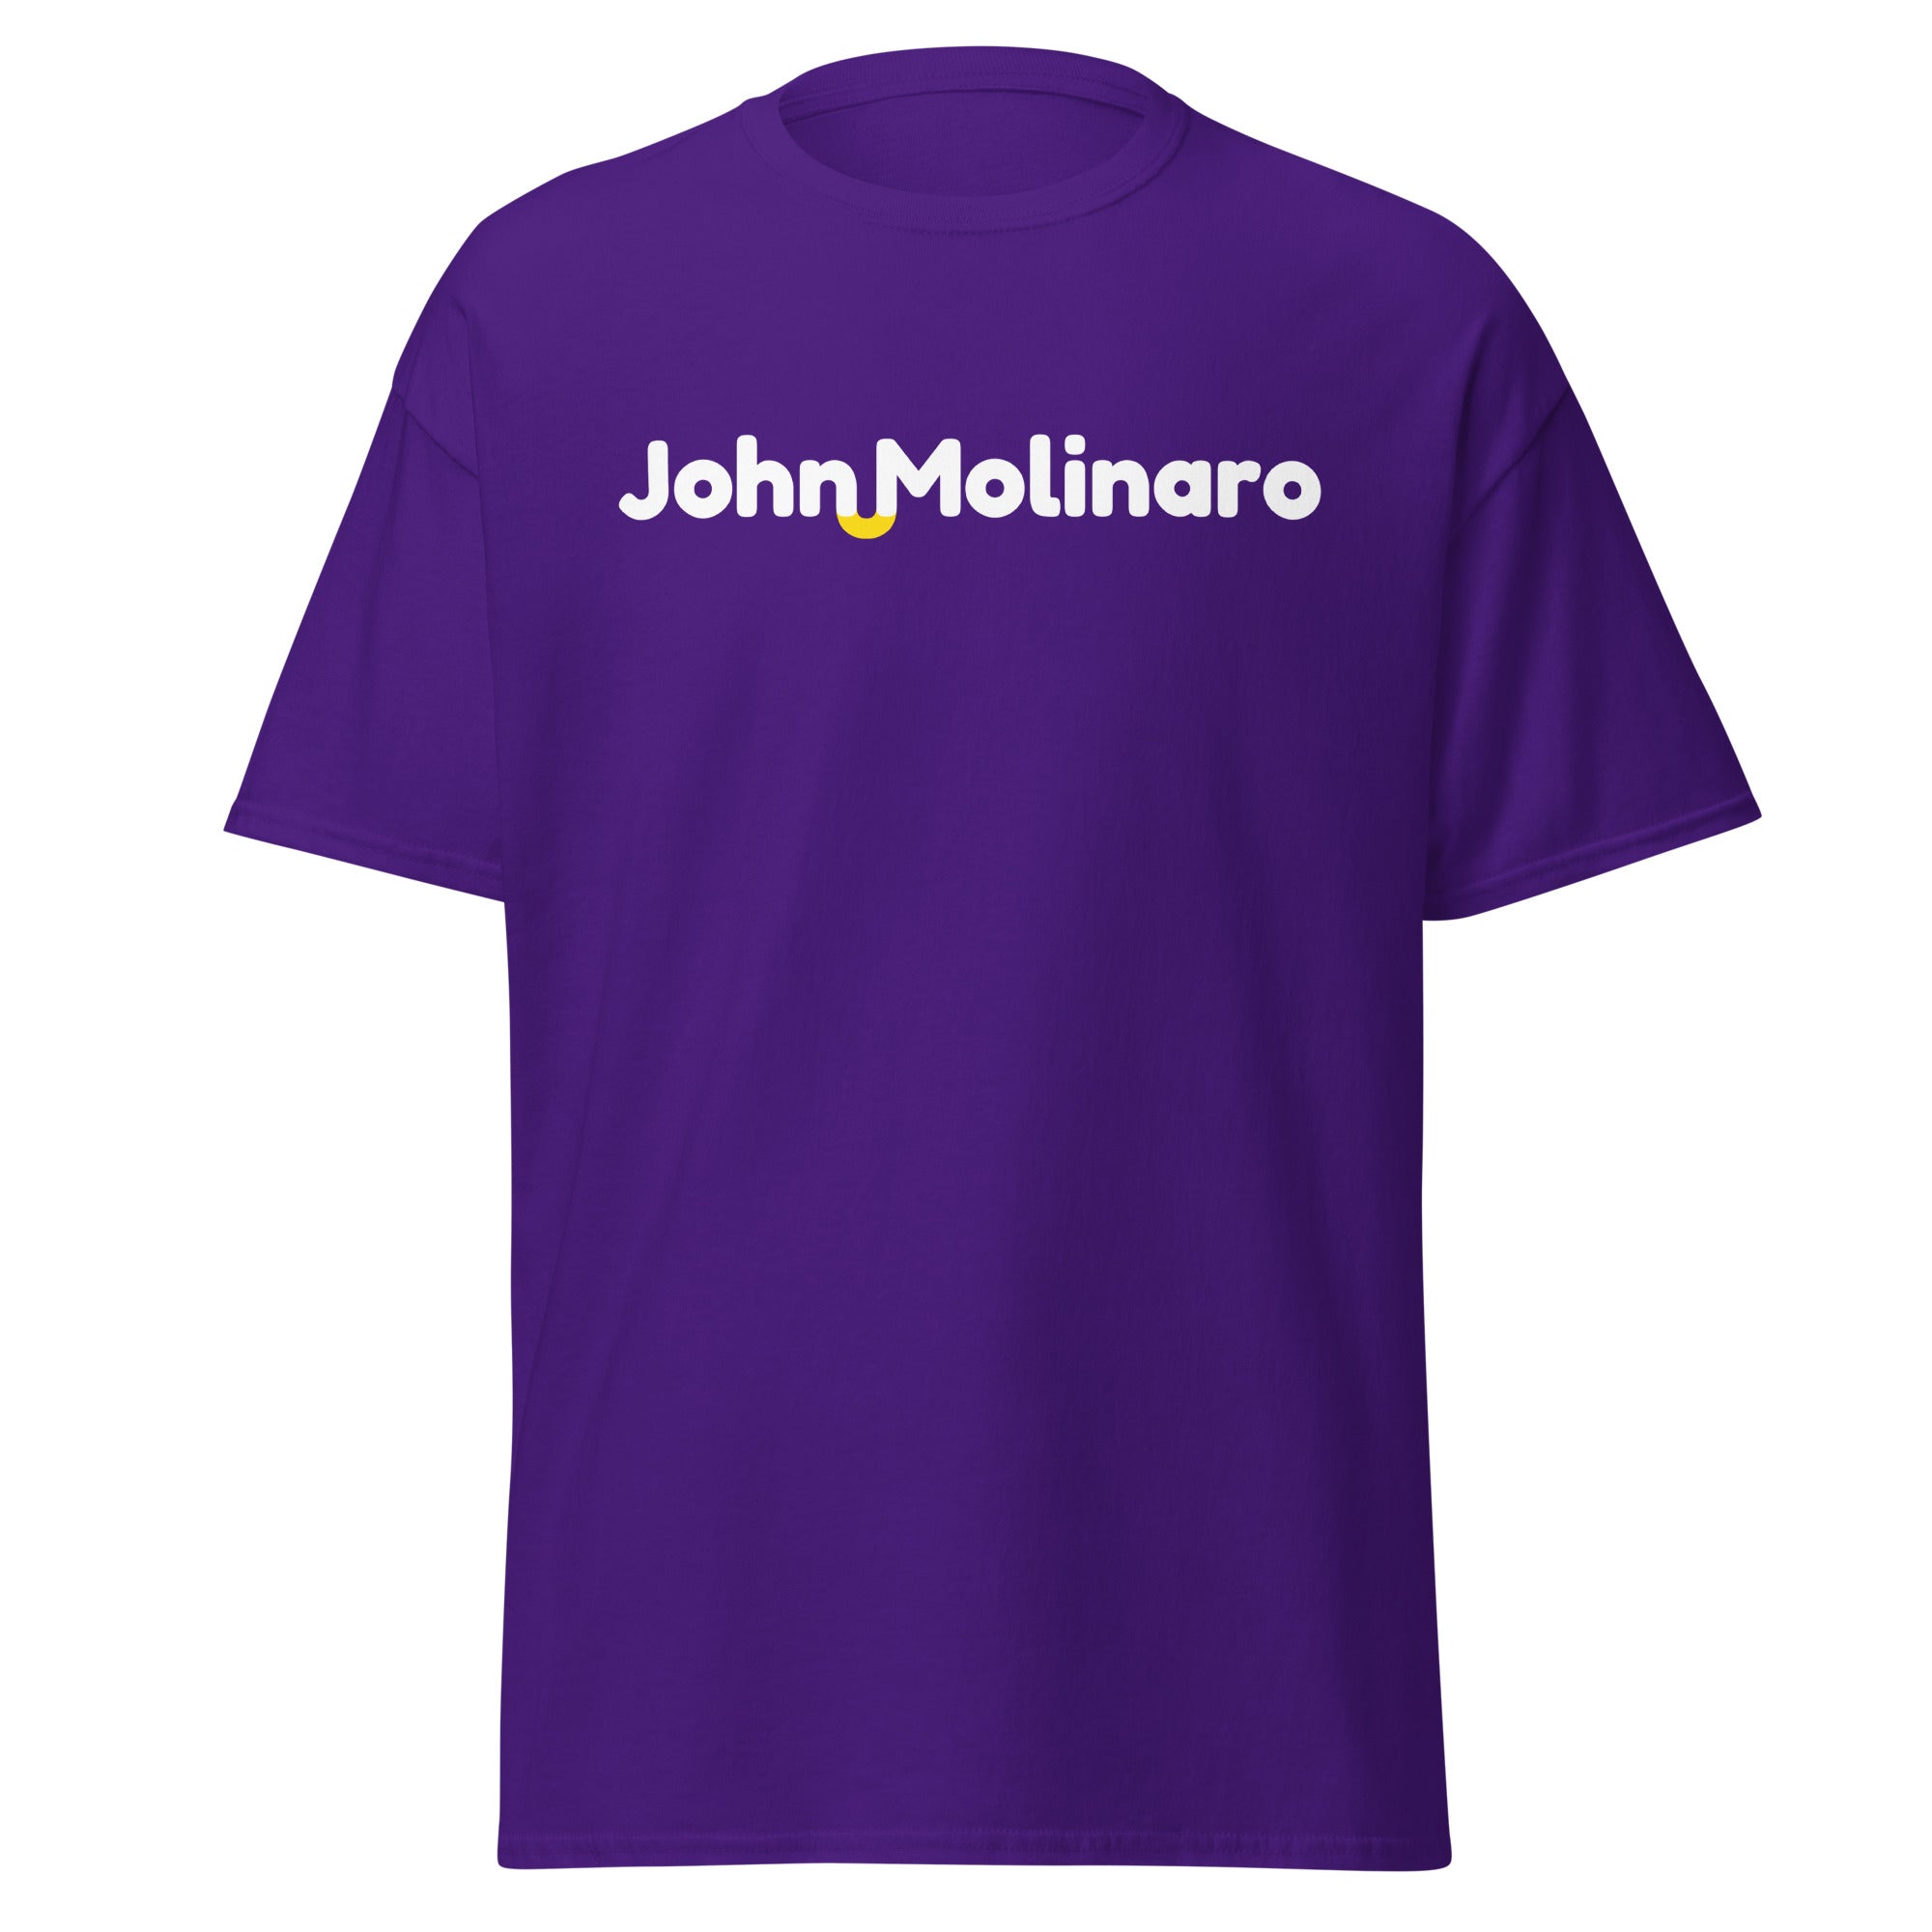 John Molinaro - classic tee